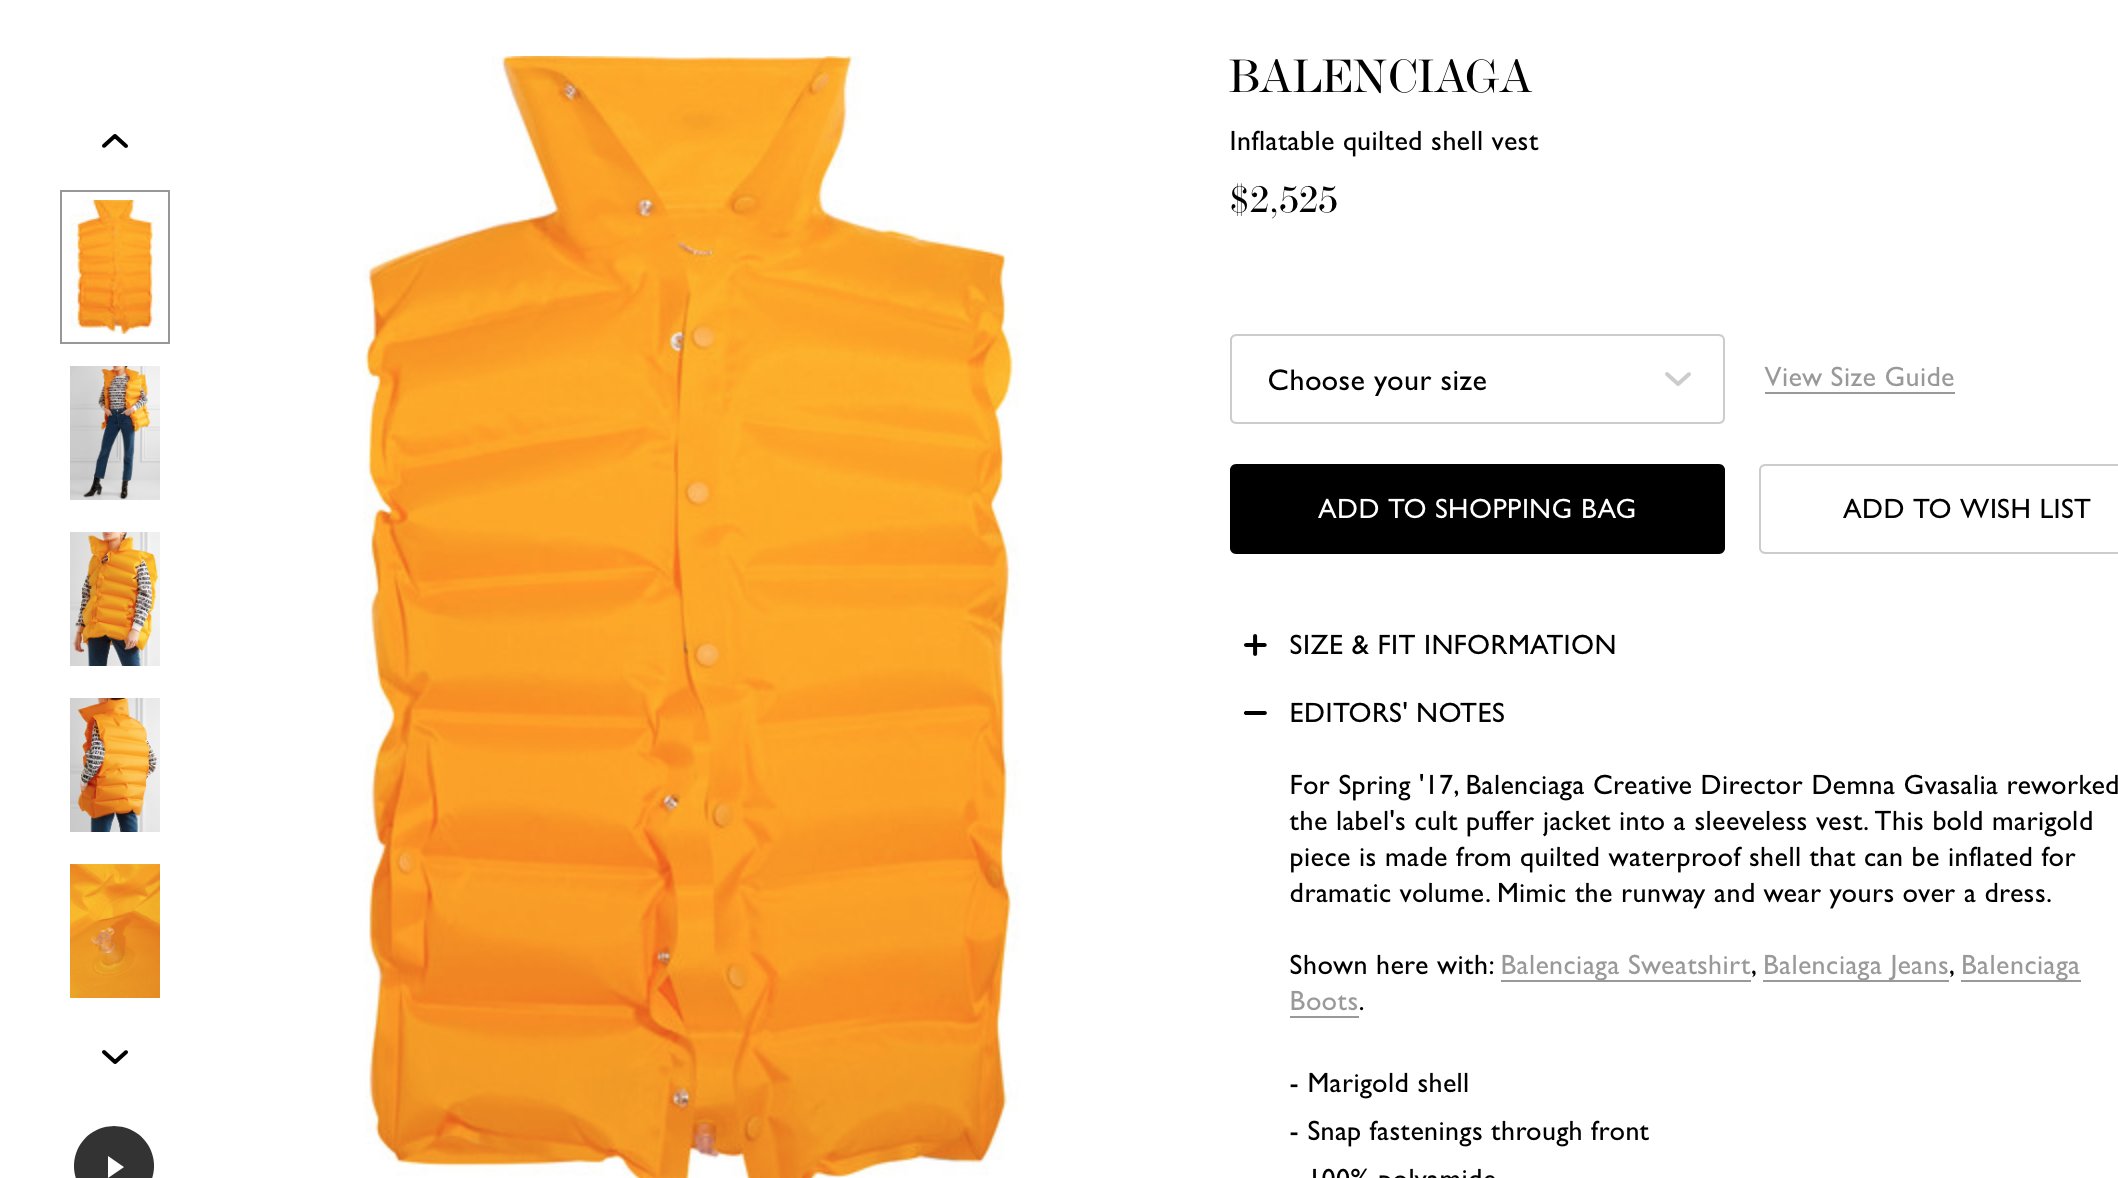 generation Allerede harmonisk Whitney Campeau on X: "Really @BALENCIAGA? A $2,300 life jacket?!  https://t.co/jBVy376FDe" / X